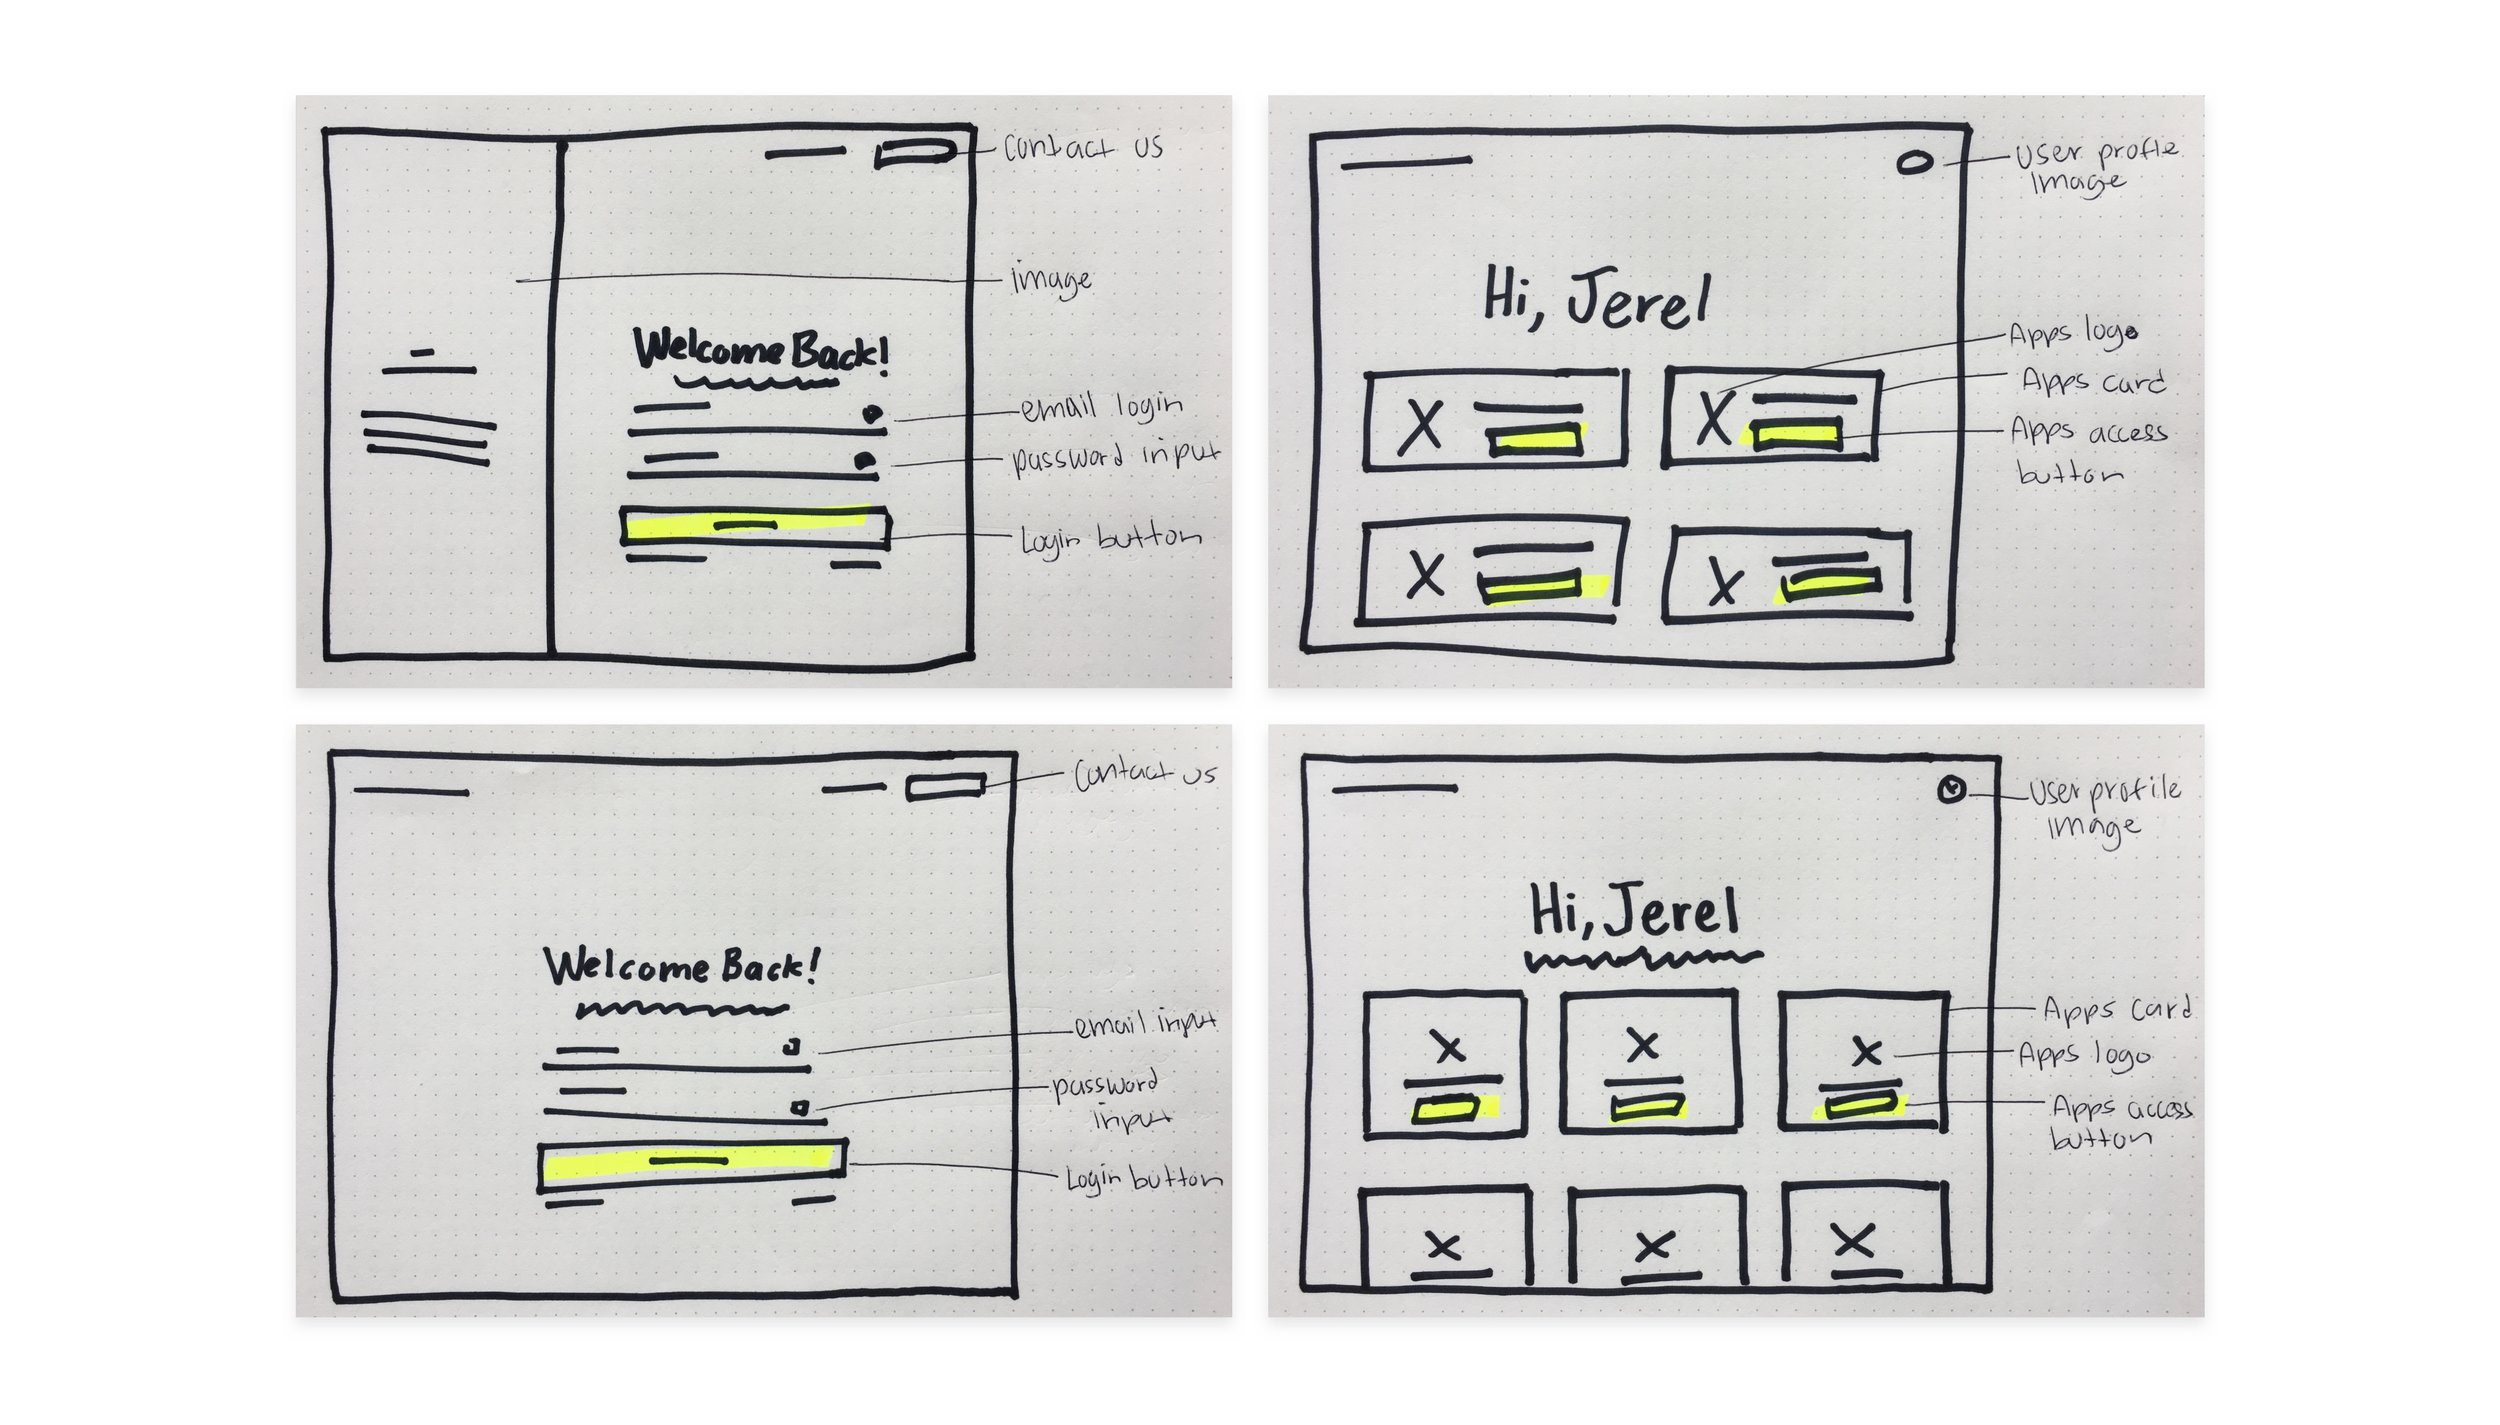 How to Design a Travel App Login Screen in Sketch | Envato Tuts+